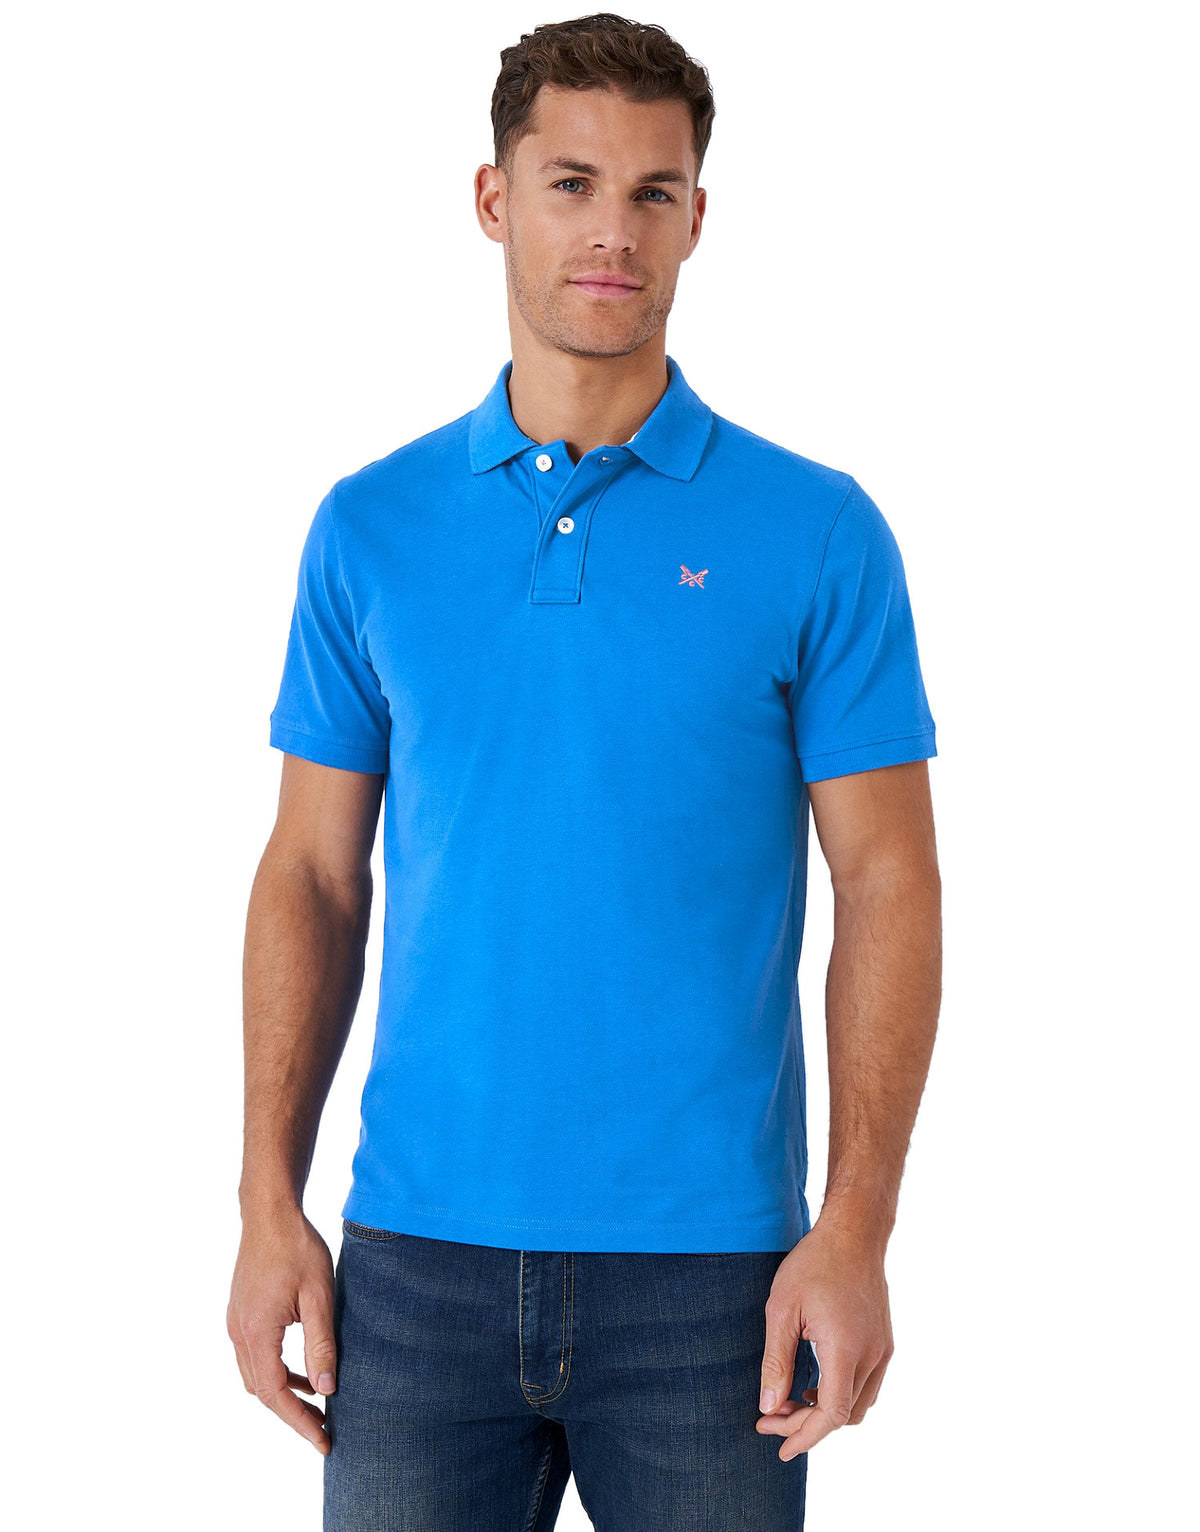 Crew Clothing Mens Pique Polo Shirt 'Classic Pique Polo' - Short Sleeved, 01, Mke002, Victoria Blue